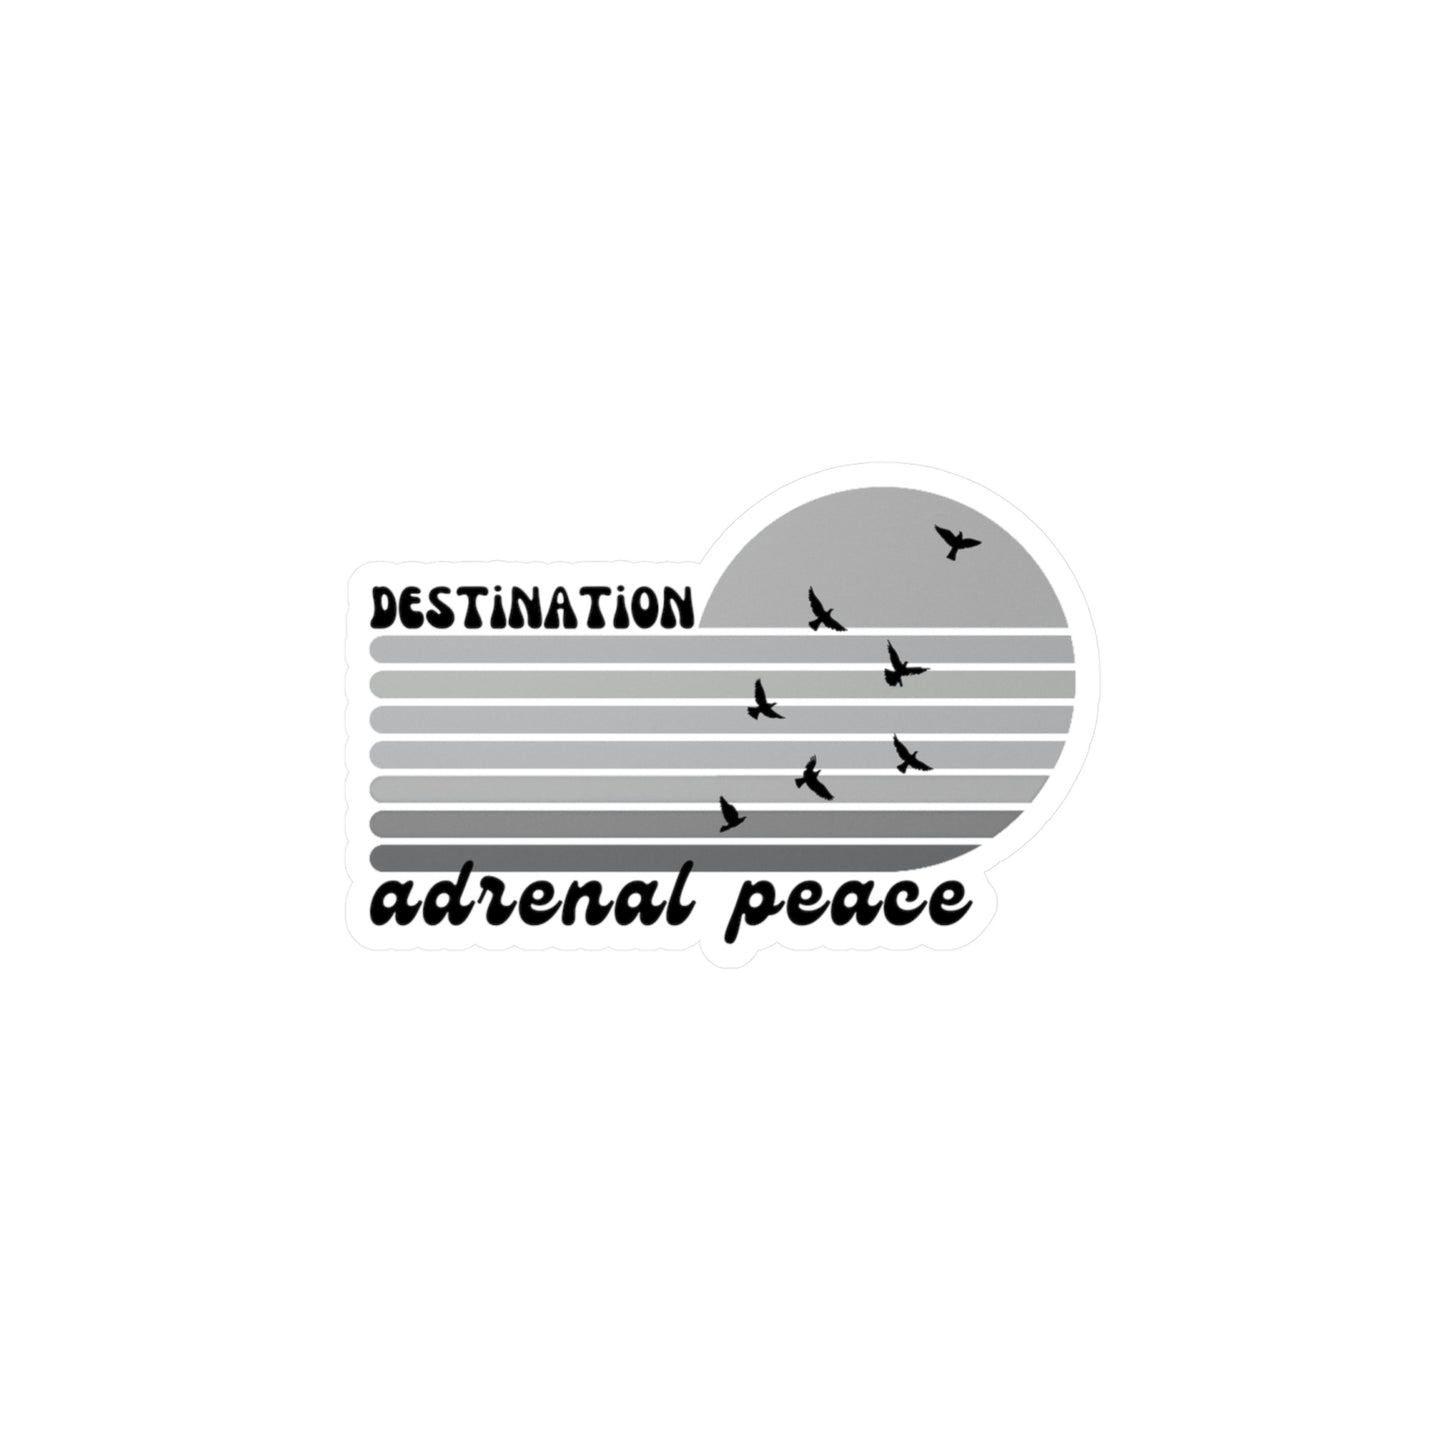 Destination: Adrenal Peace (grayscale) Kiss-Cut Vinyl Decals